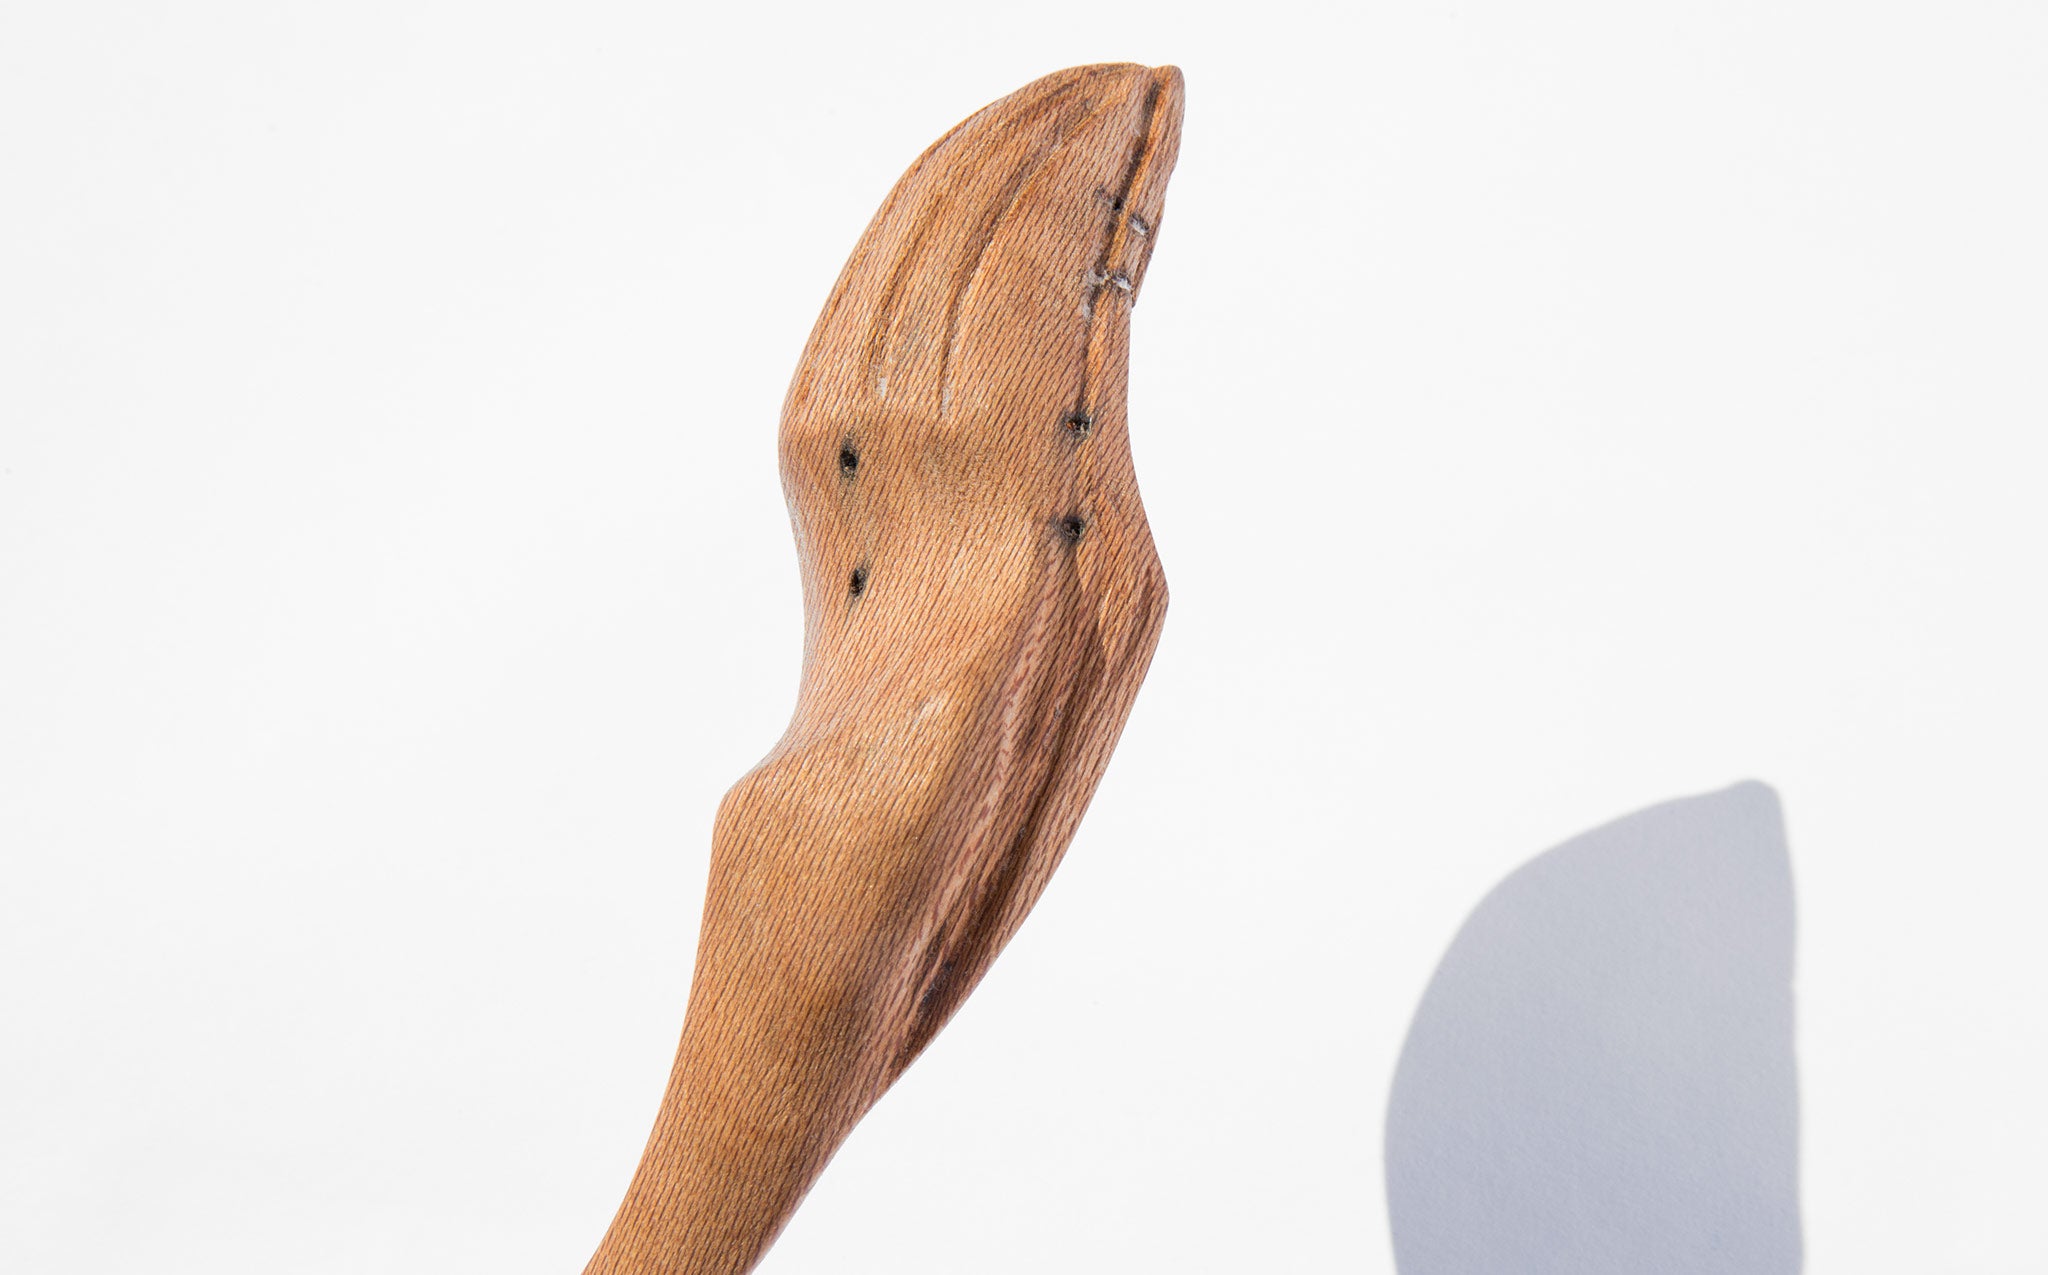 Hand Carved Chicken Foot Serving Fork